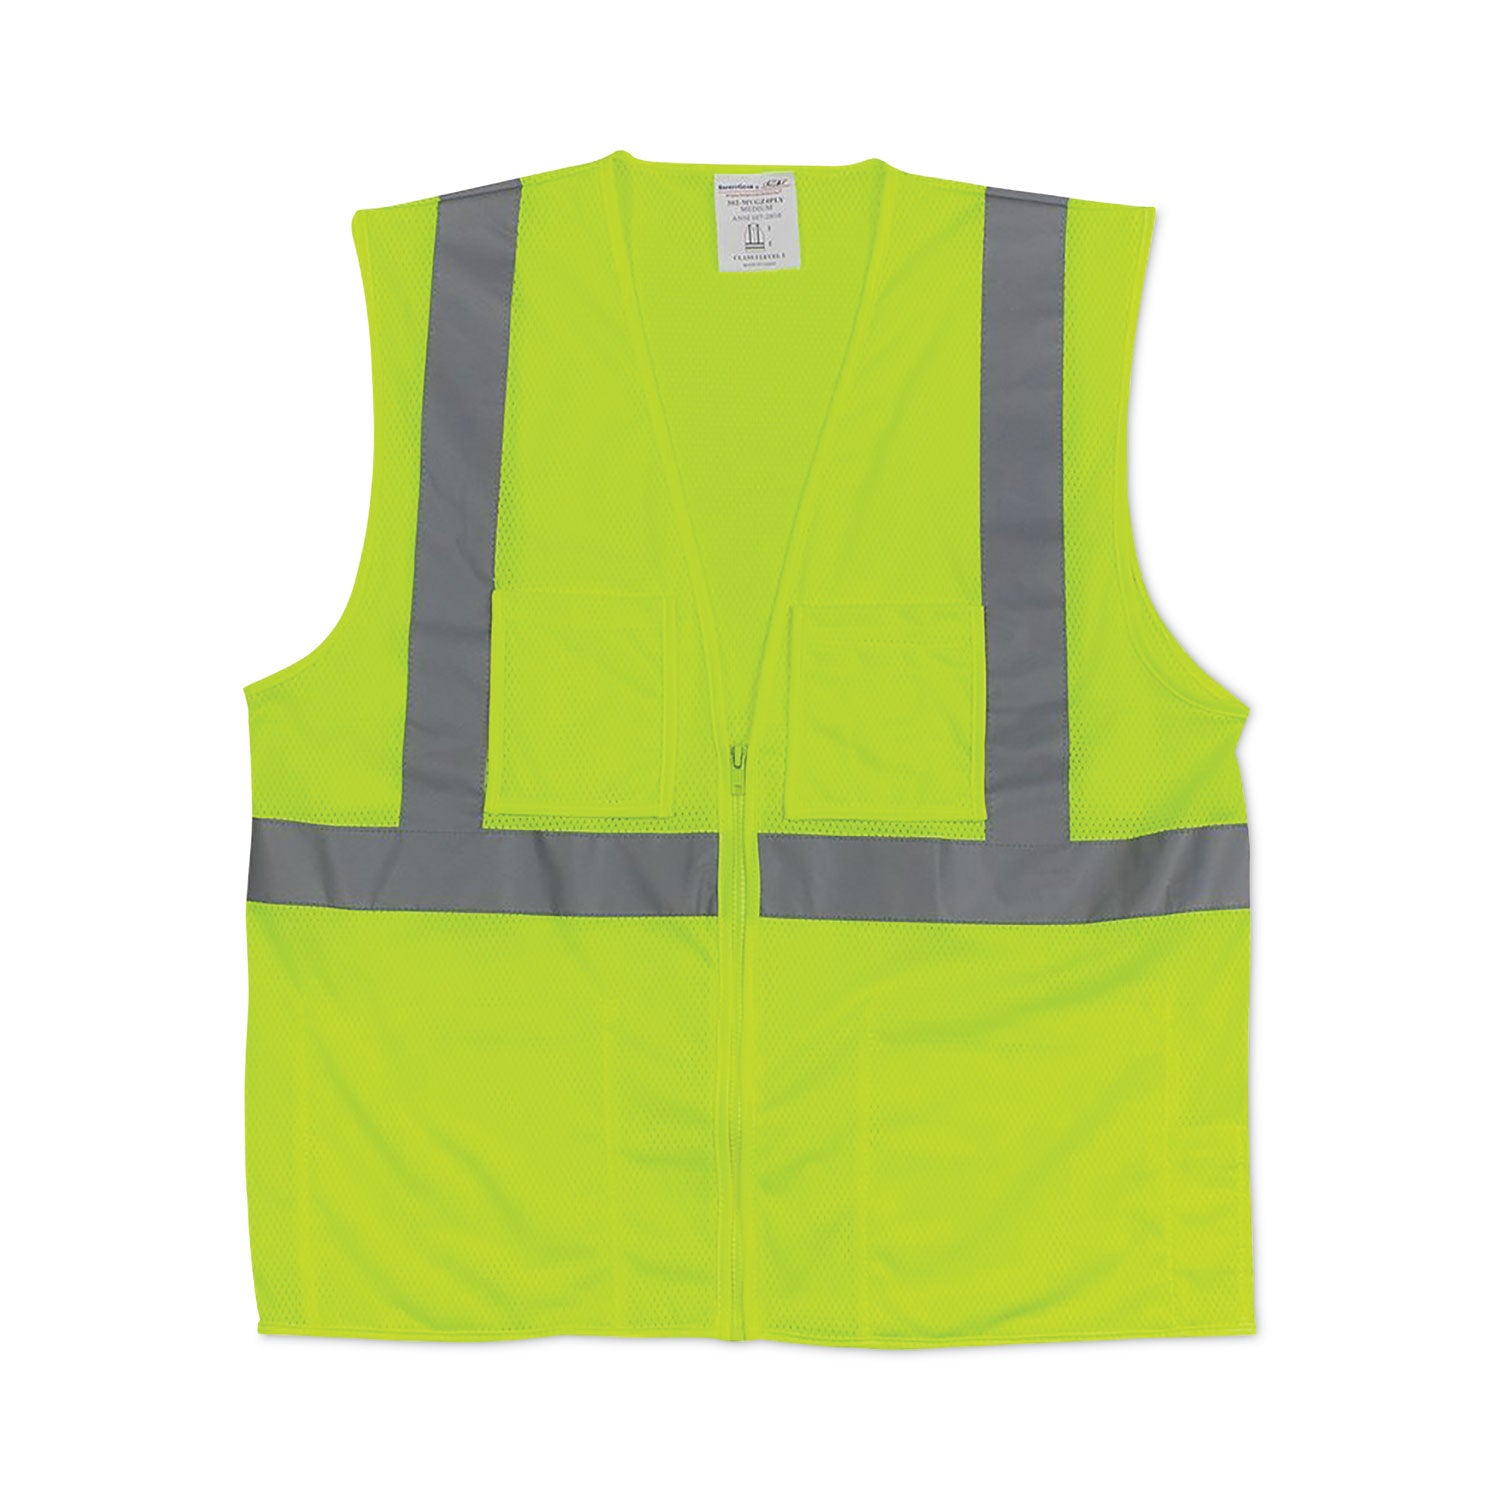 ansi-class-2-four-pocket-zipper-safety-vest-polyester-mesh-3x-large-hi-viz-lime-yellow_pid302mvgz4ply3 - 1